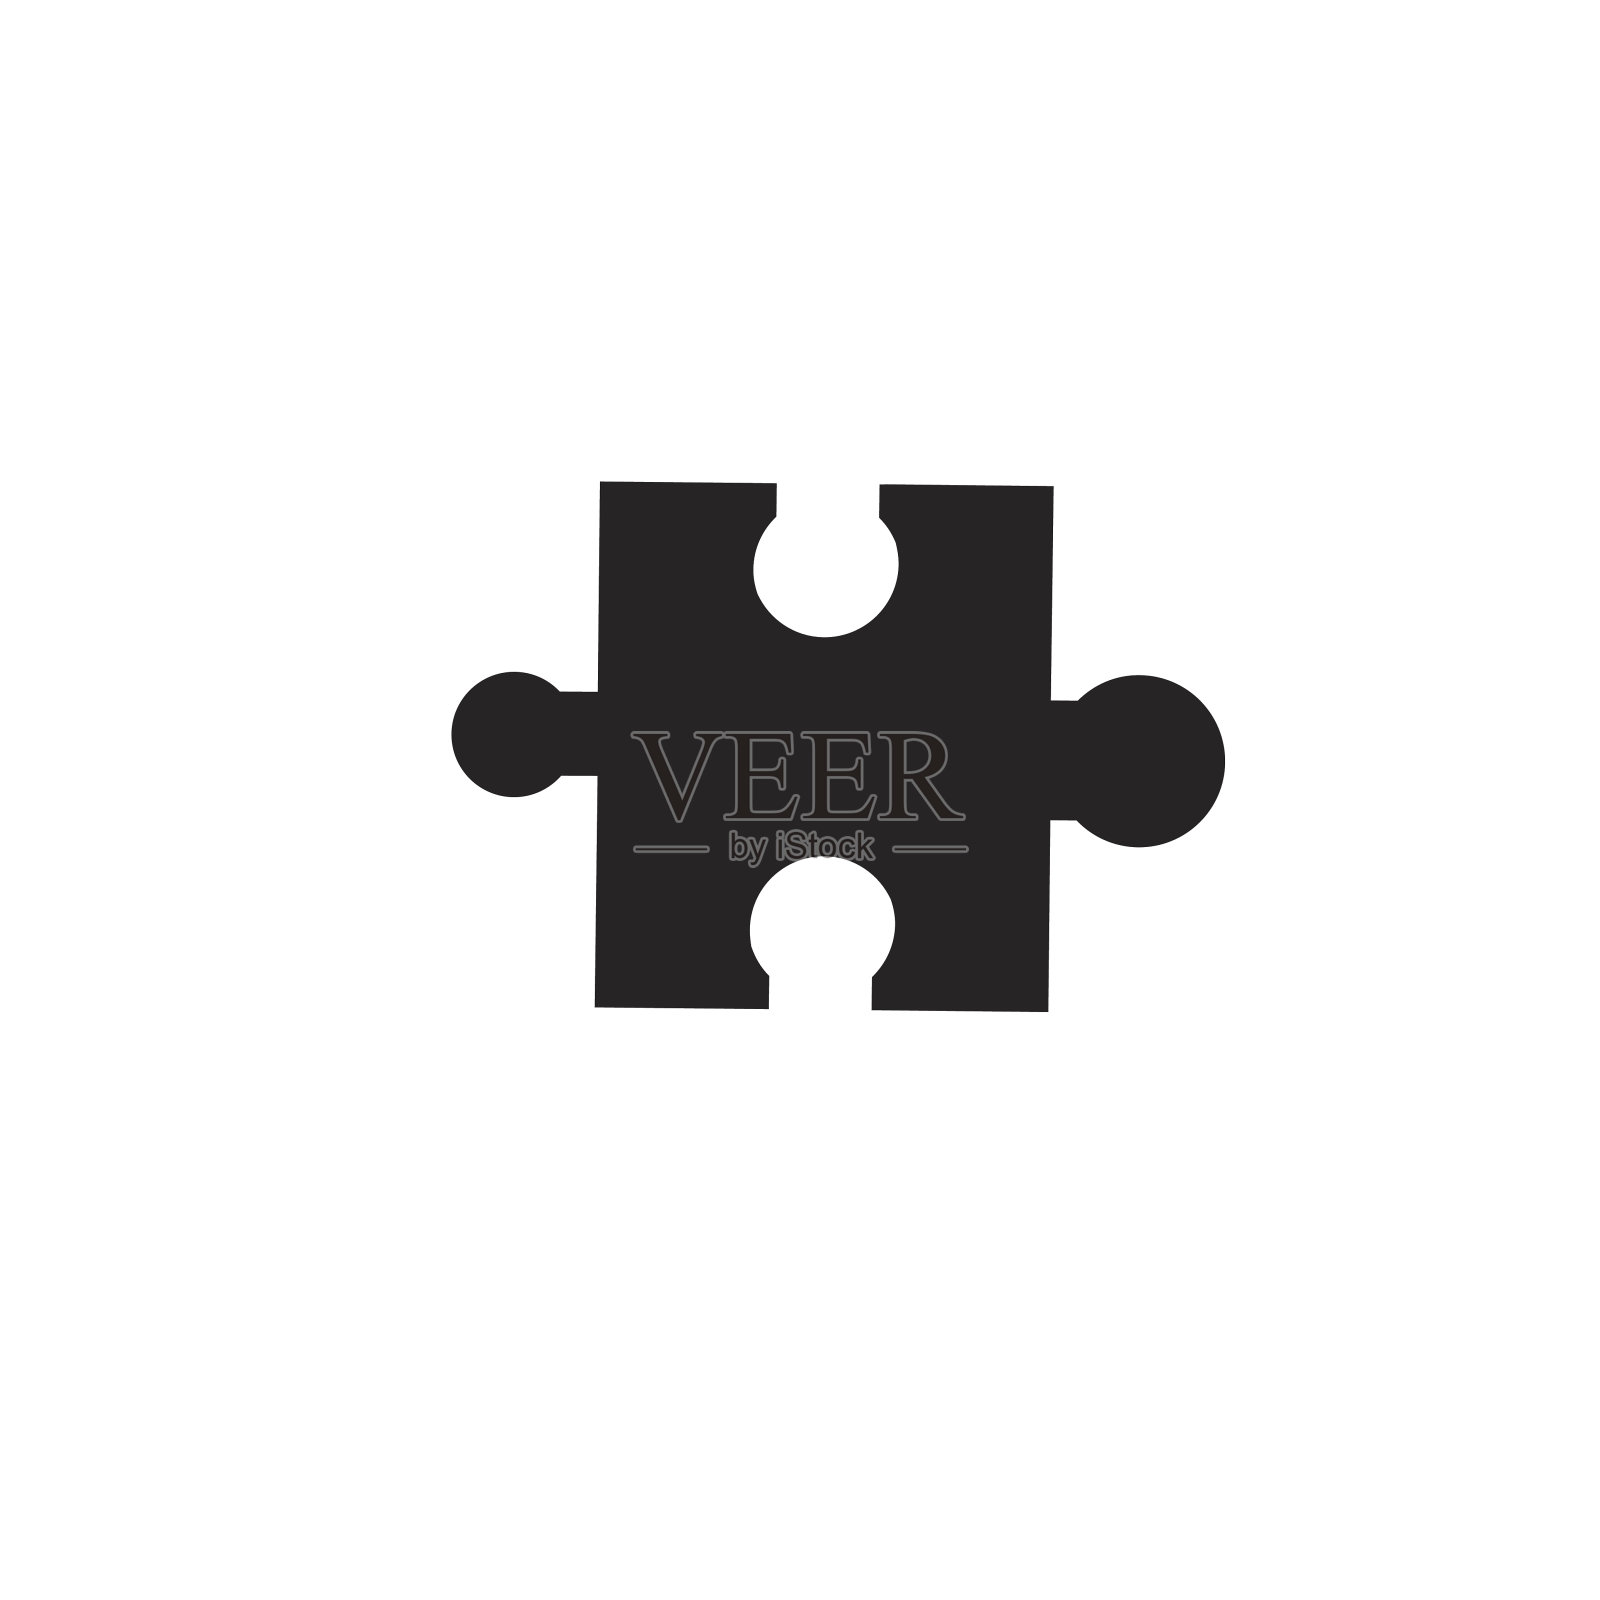 Jigsaw Pieces轮廓马蹄形图标的网站设计设计元素图片